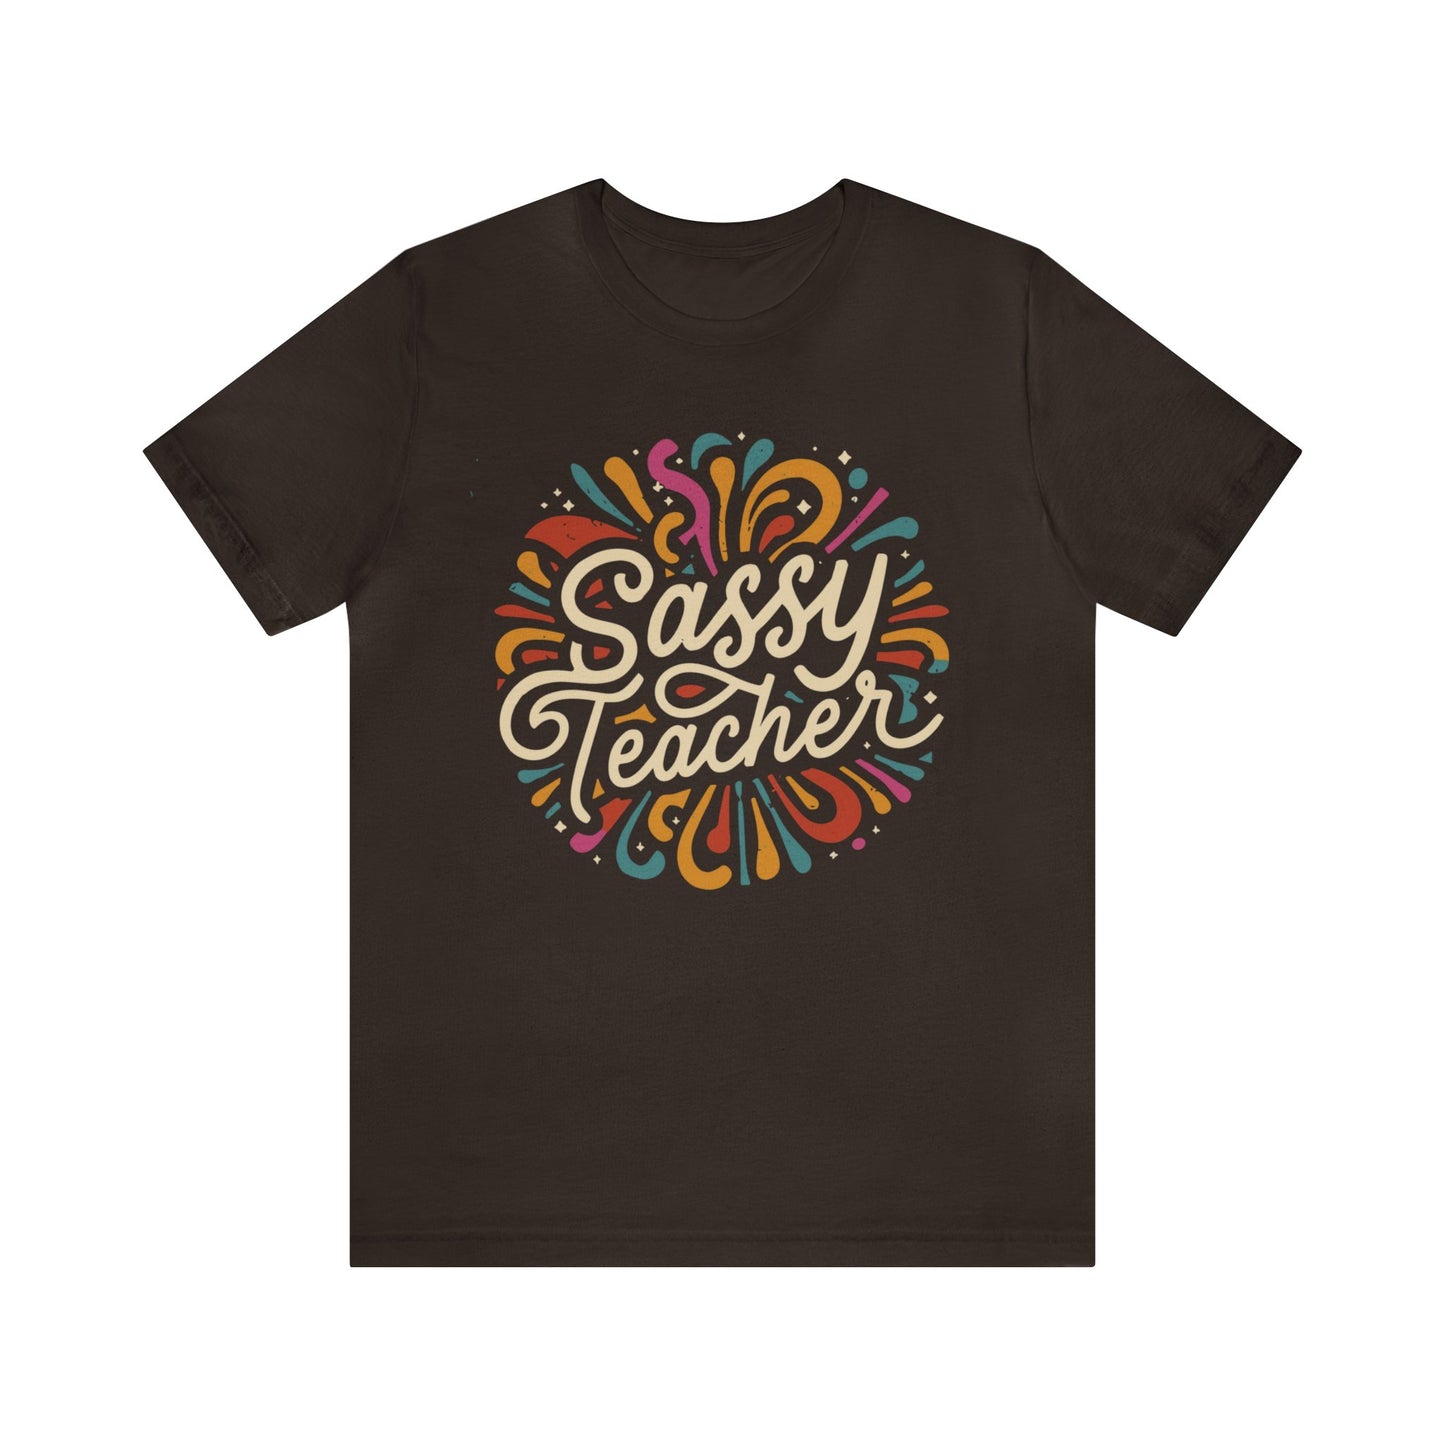 Teacher Tshirt - "Sassy Teacher"